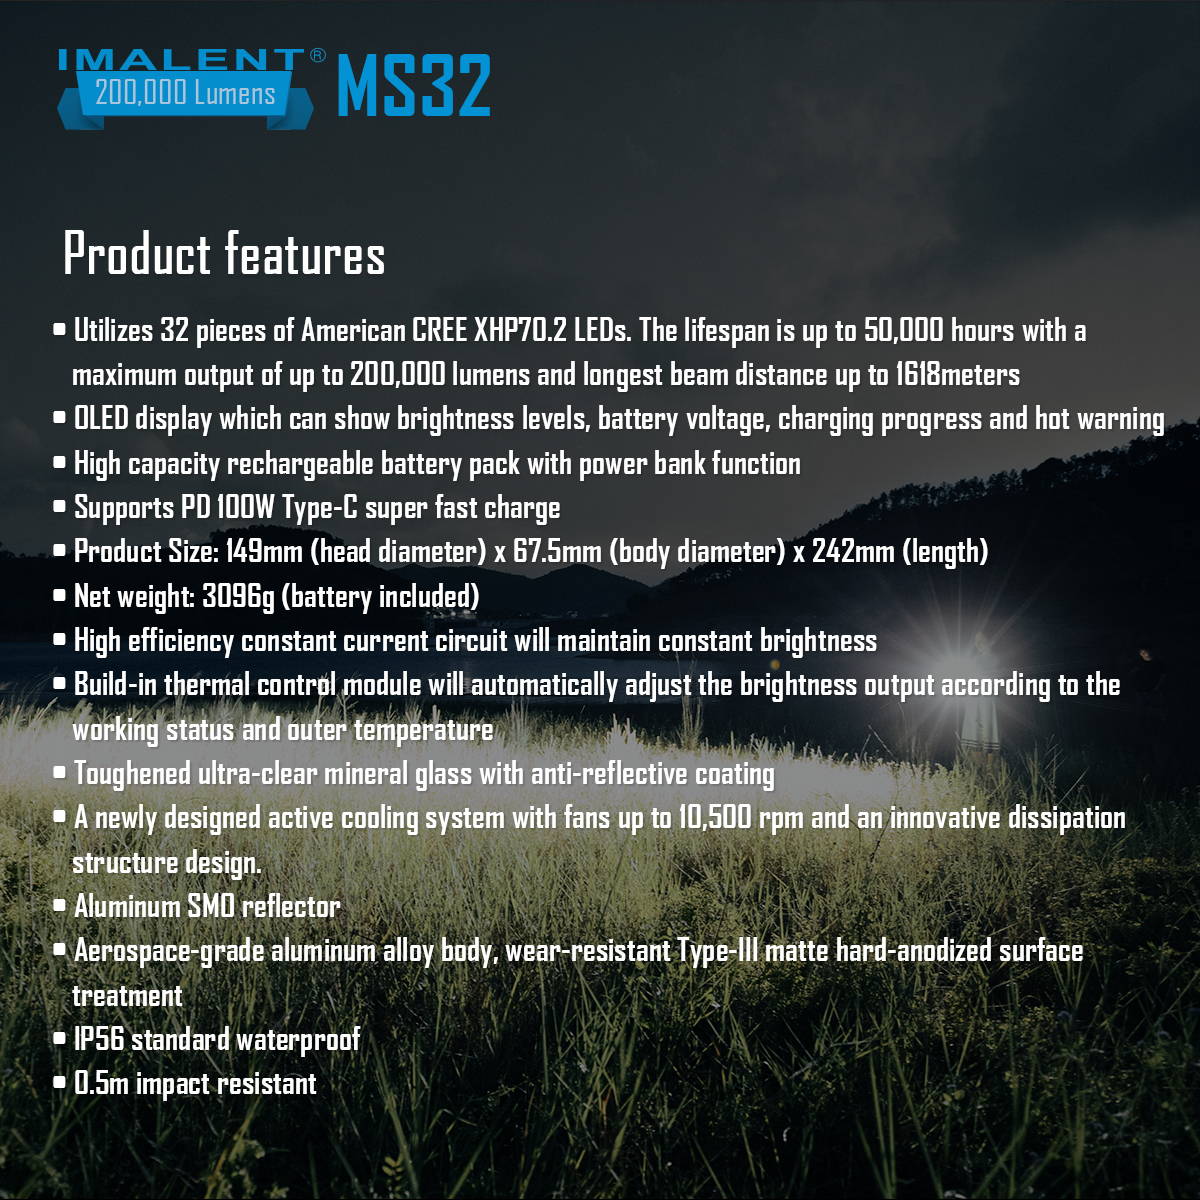 IMALENT MS32 Brightest Flashlight